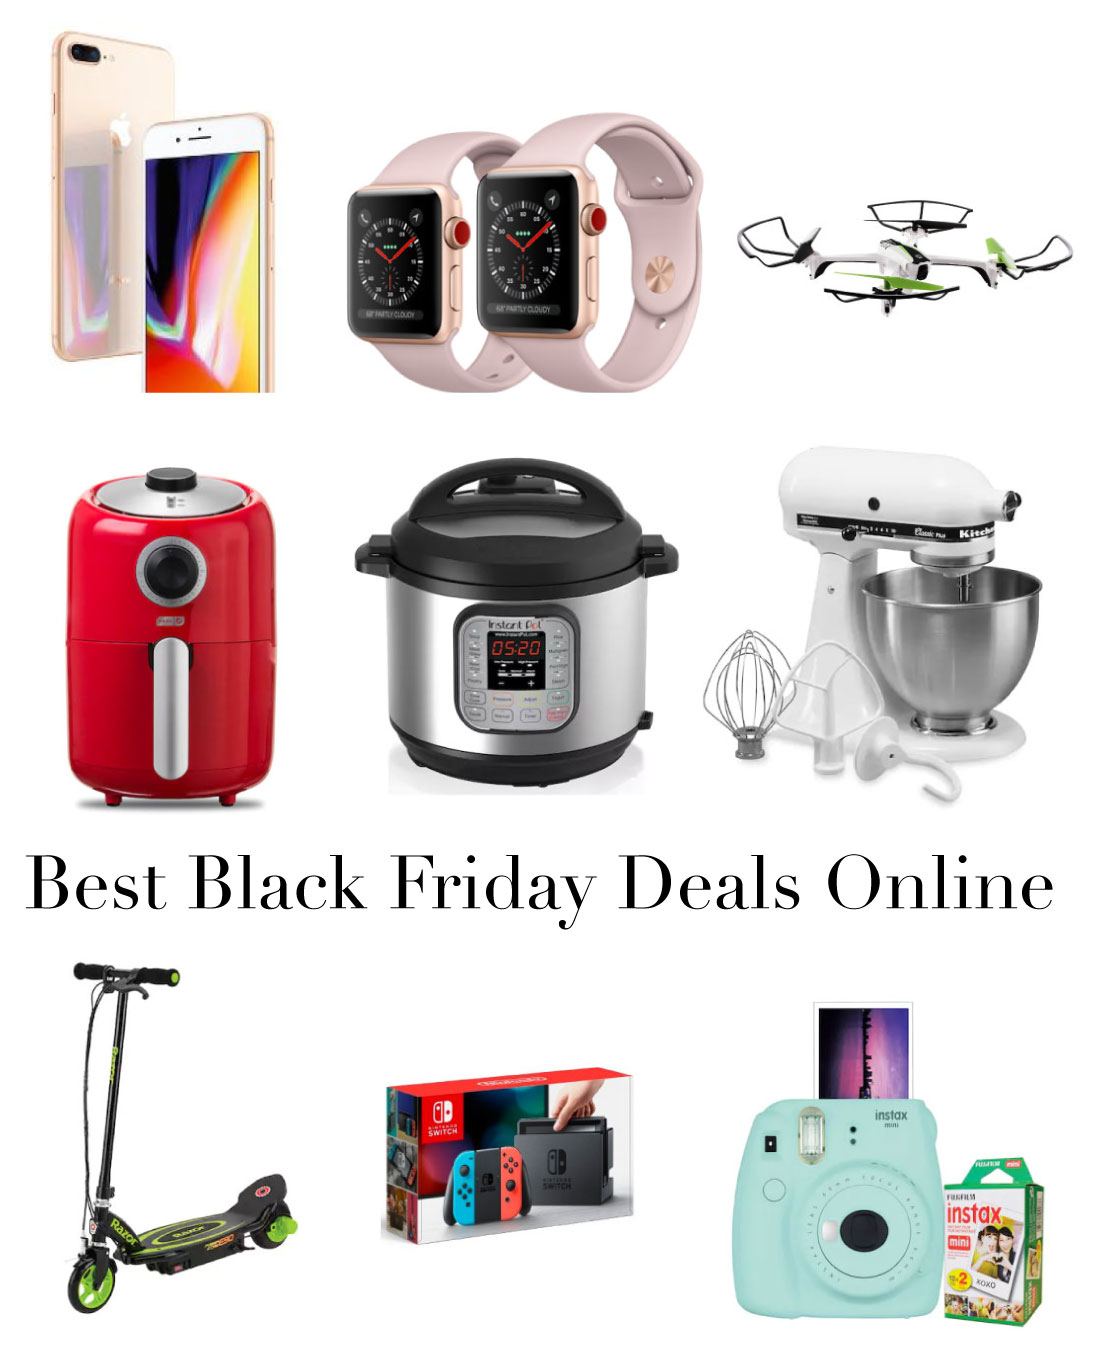 Best Black Friday Deals Online from www.thirtyhandmadedays.com